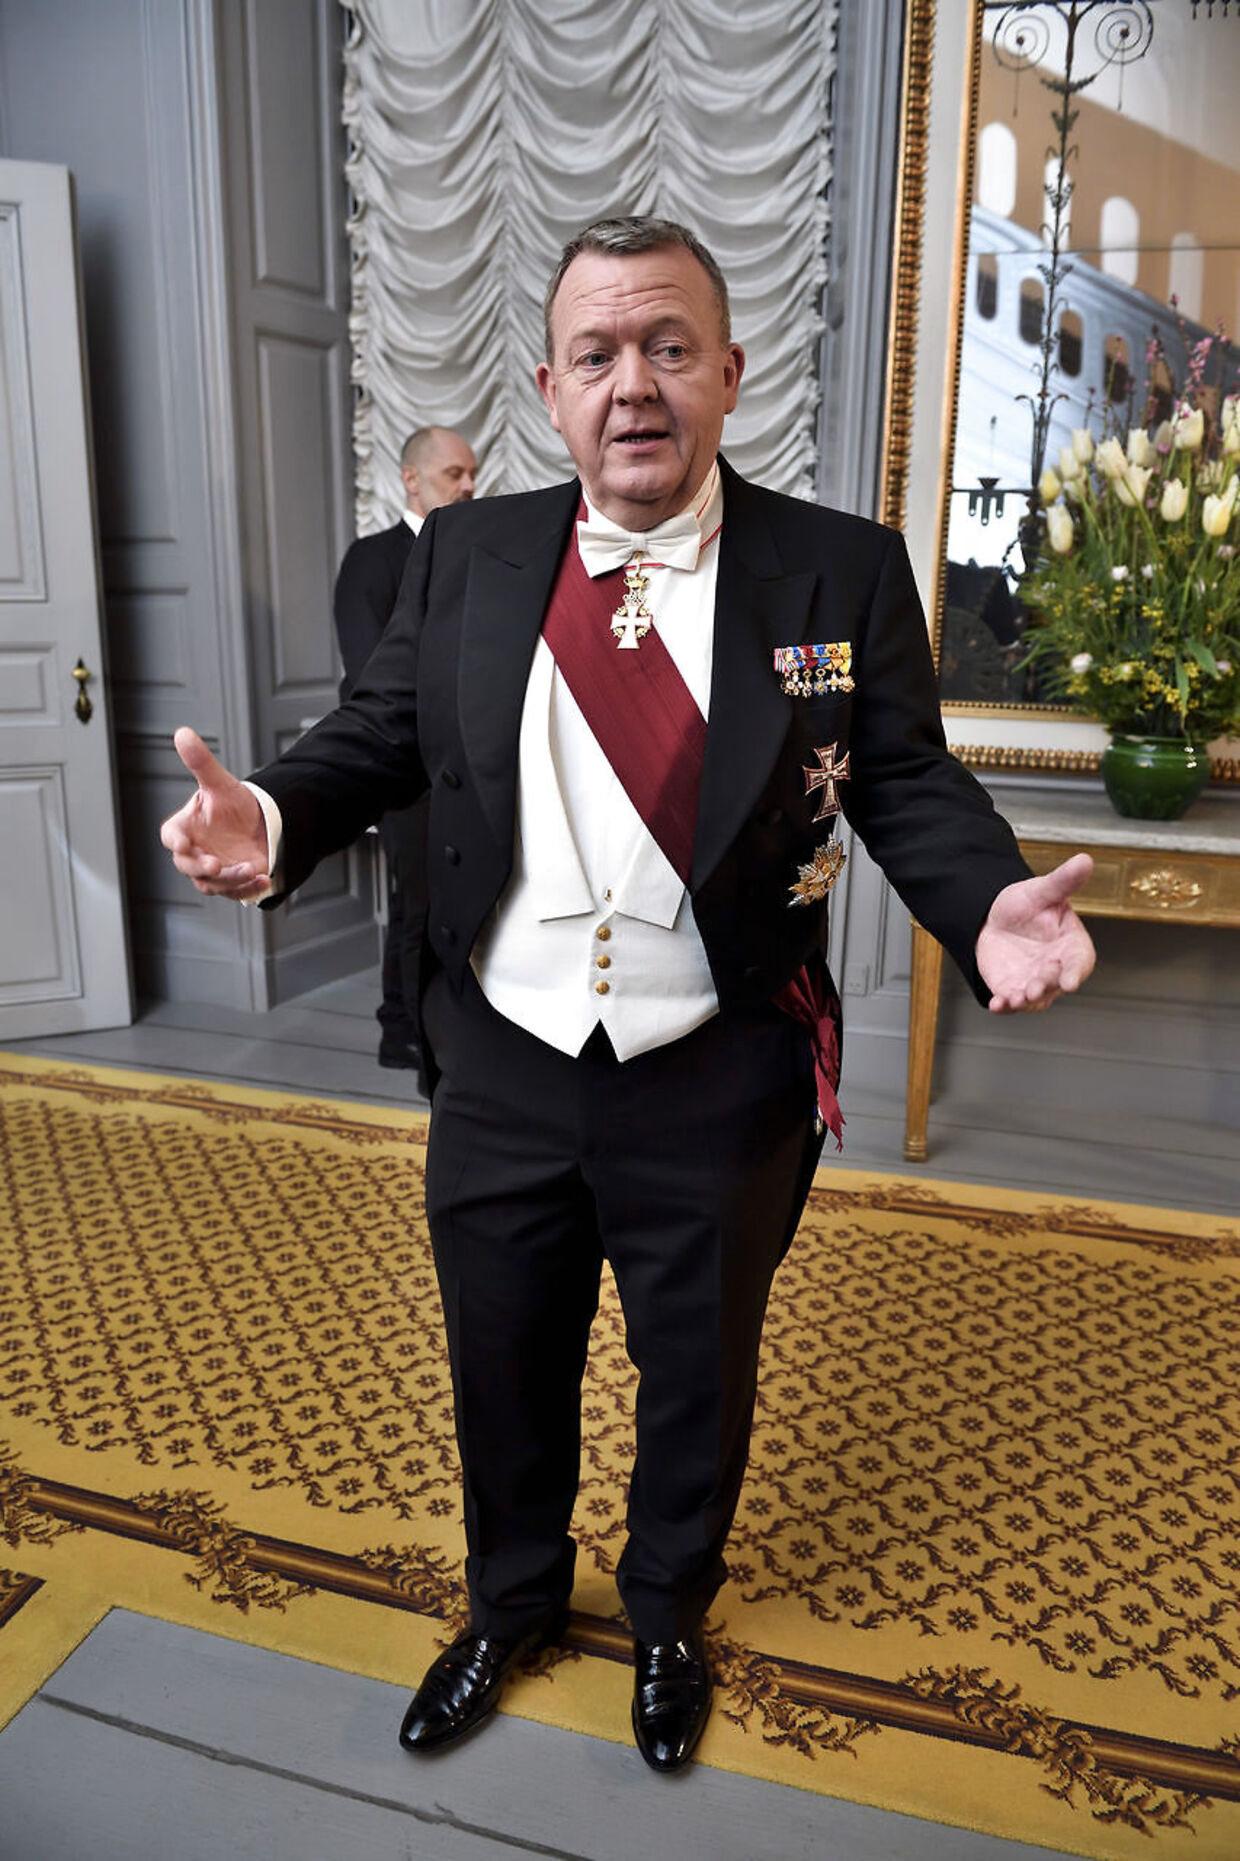 Statsminister Lars løkke Rasmussen var i kjole og hvidt, ligesom de fleste andre var ved årets nytårstaffel.